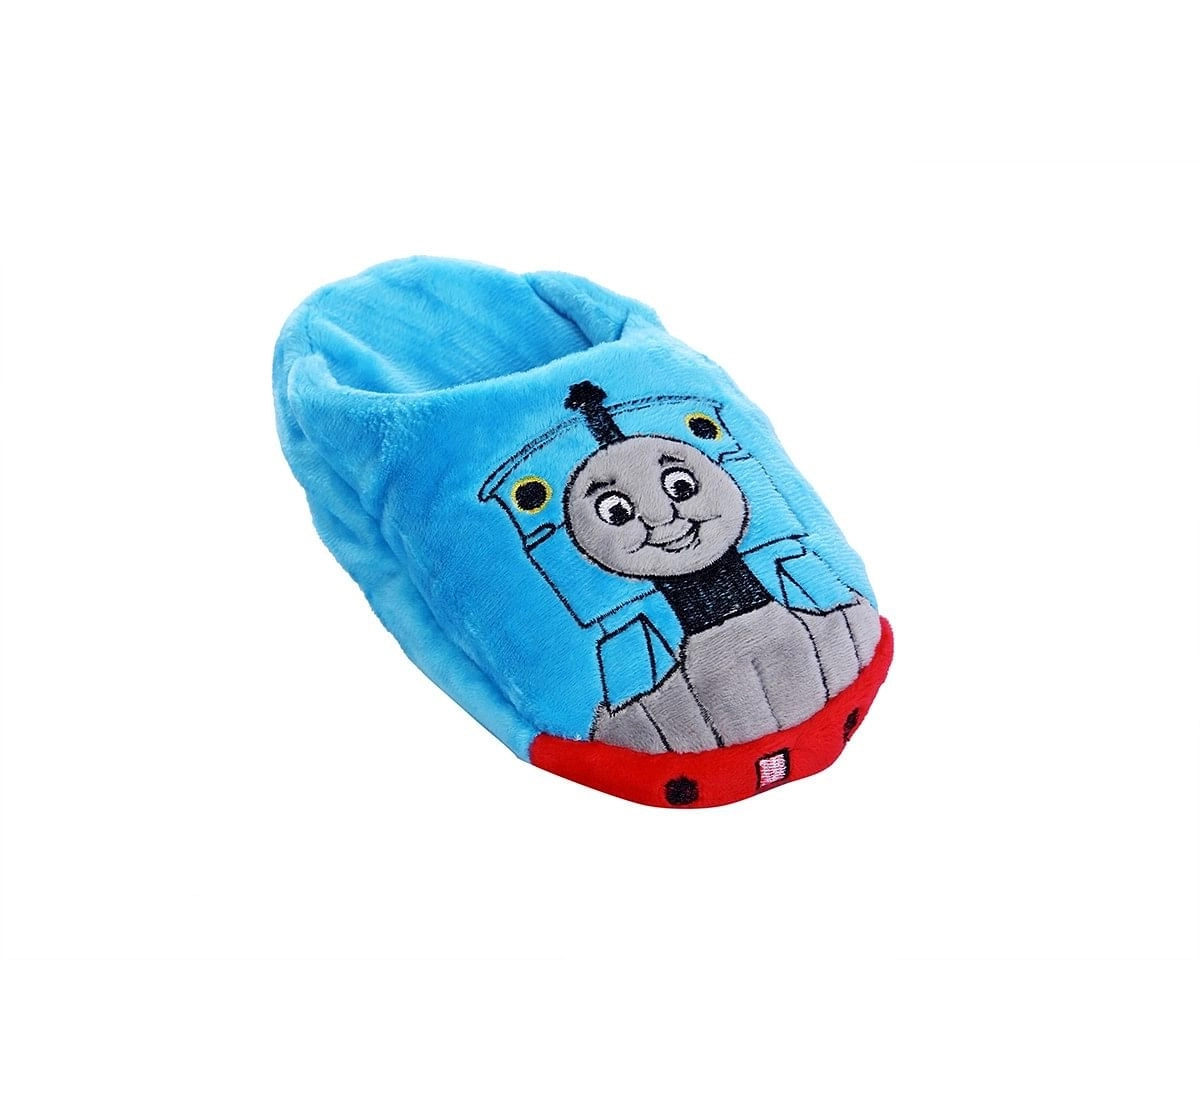  Thomas & Friends Flip Flop Small Plush Accessories for Kids age 12M+ - 5.08 Cm 